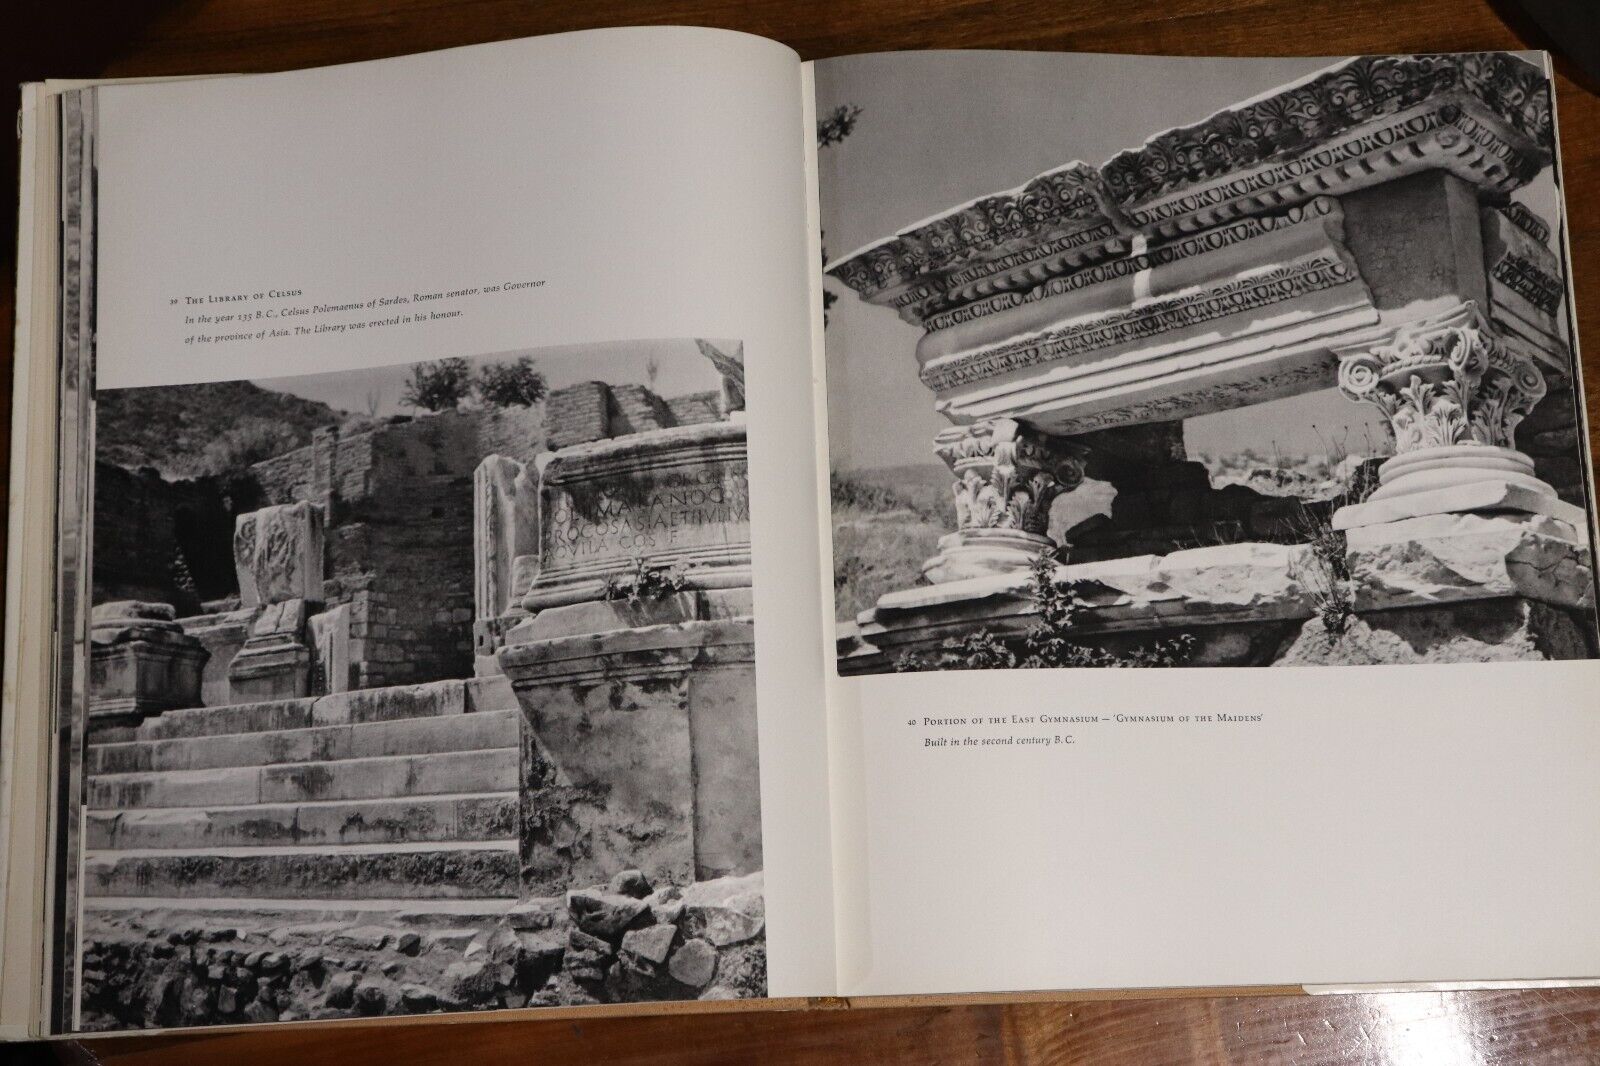 Asia Minor by Maxim Osward - 1957 - Vintage Asia Minor History Book